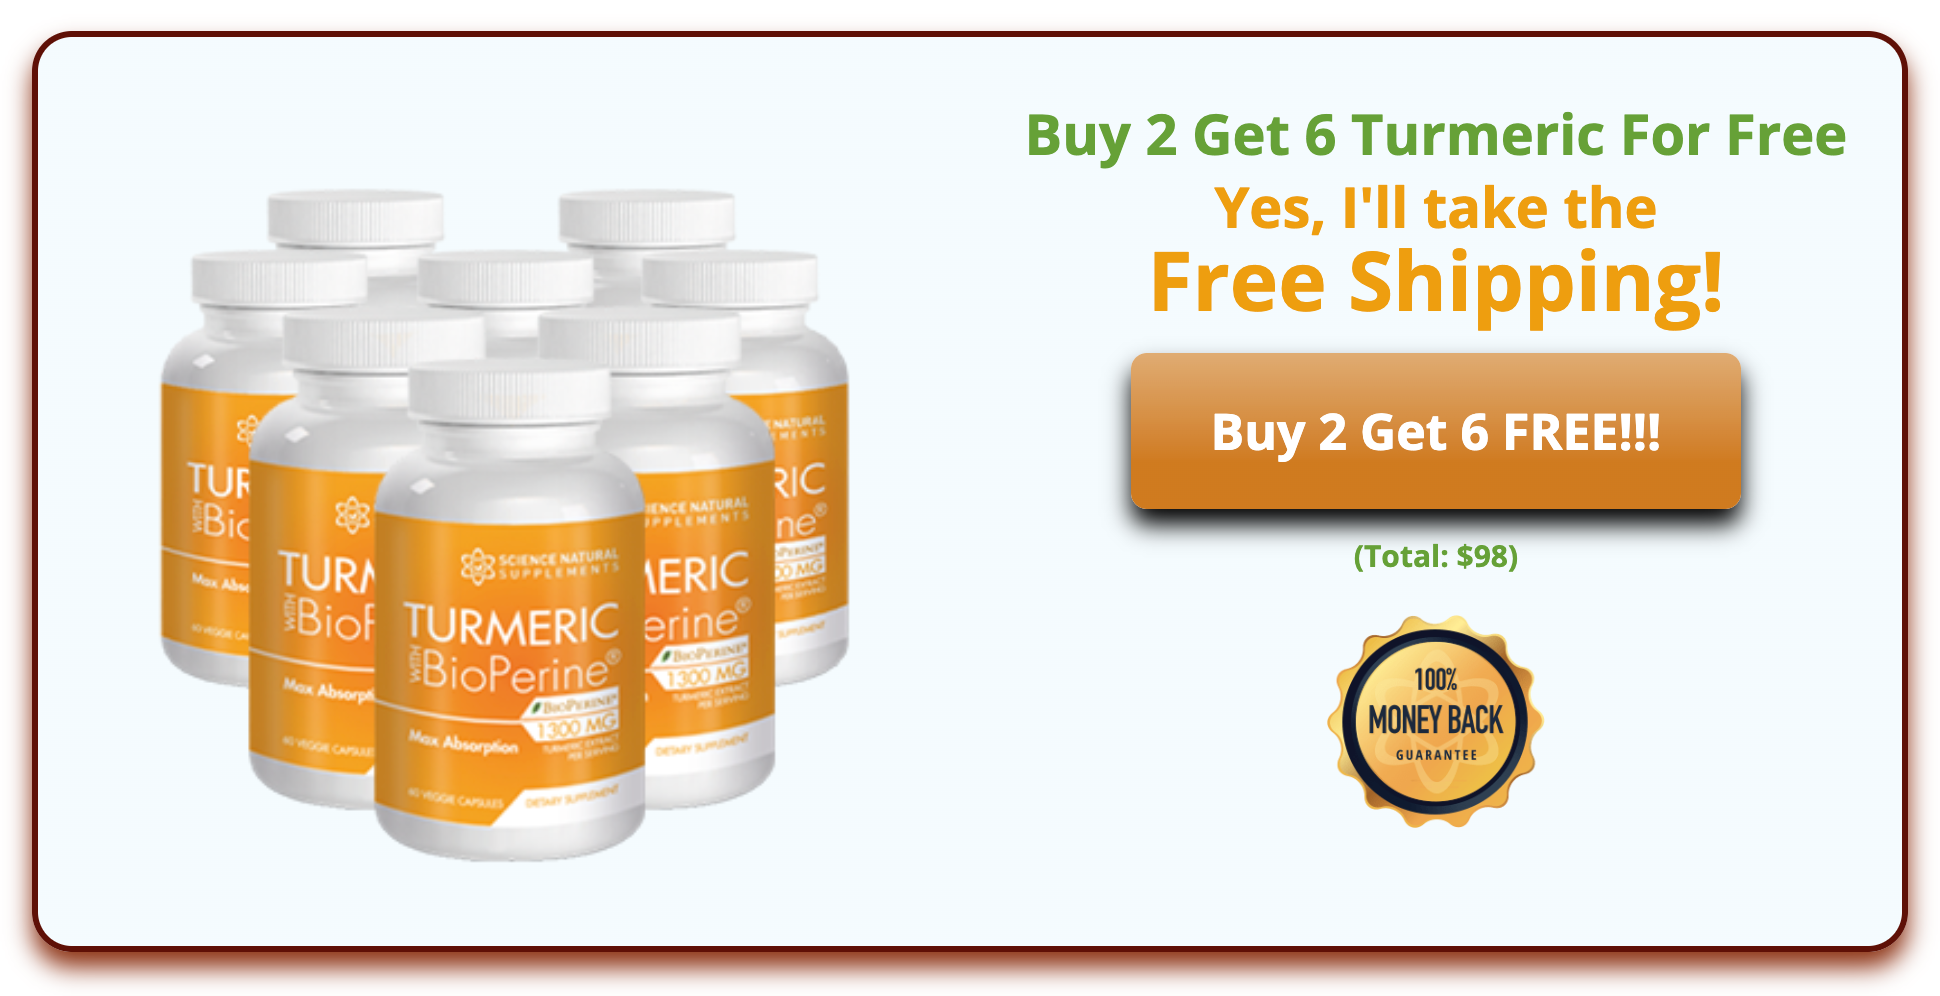 Turmeric BioPerine - Buy 2 Get 6 Turmeric For Free